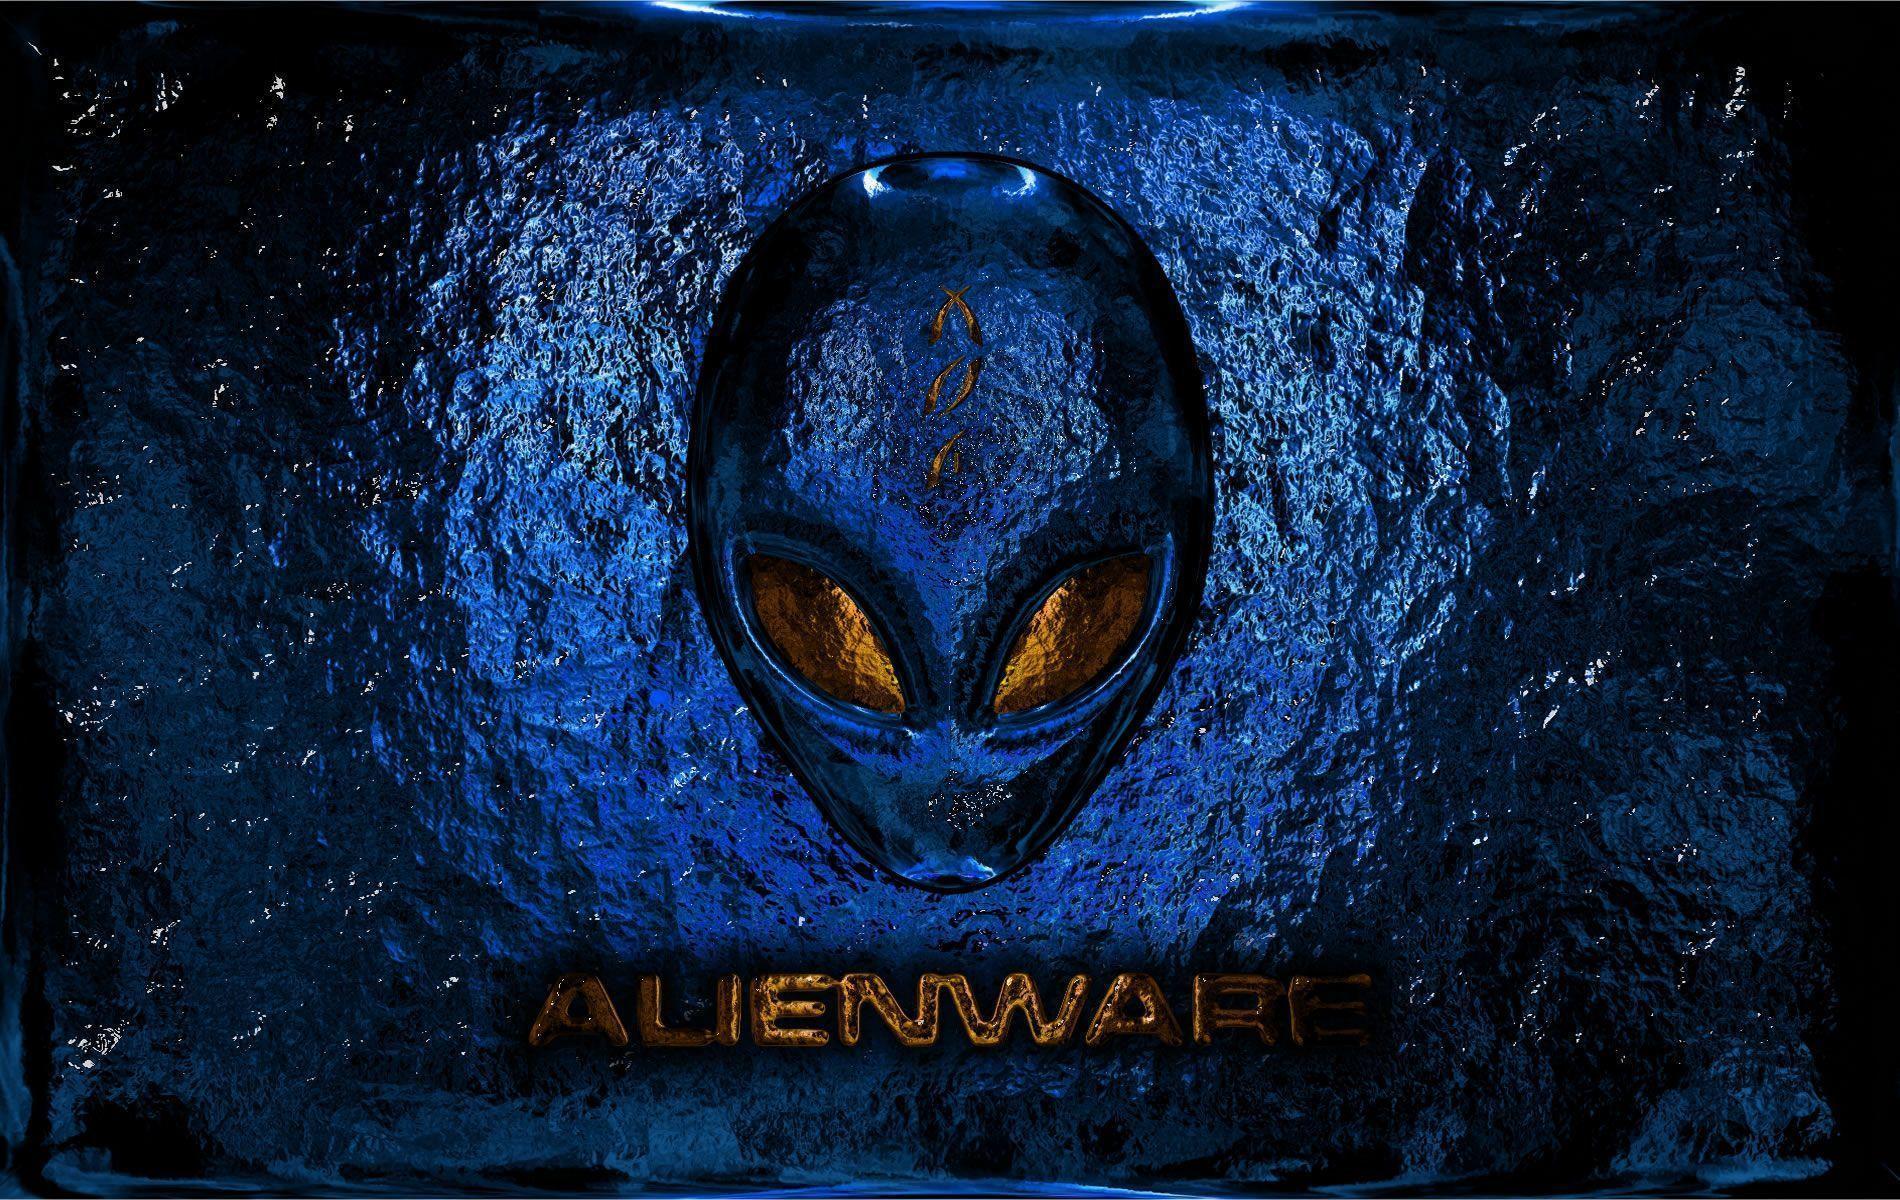 Alienware Wallpaper 81 179238 Image HD Wallpaper. Wallfoy.com